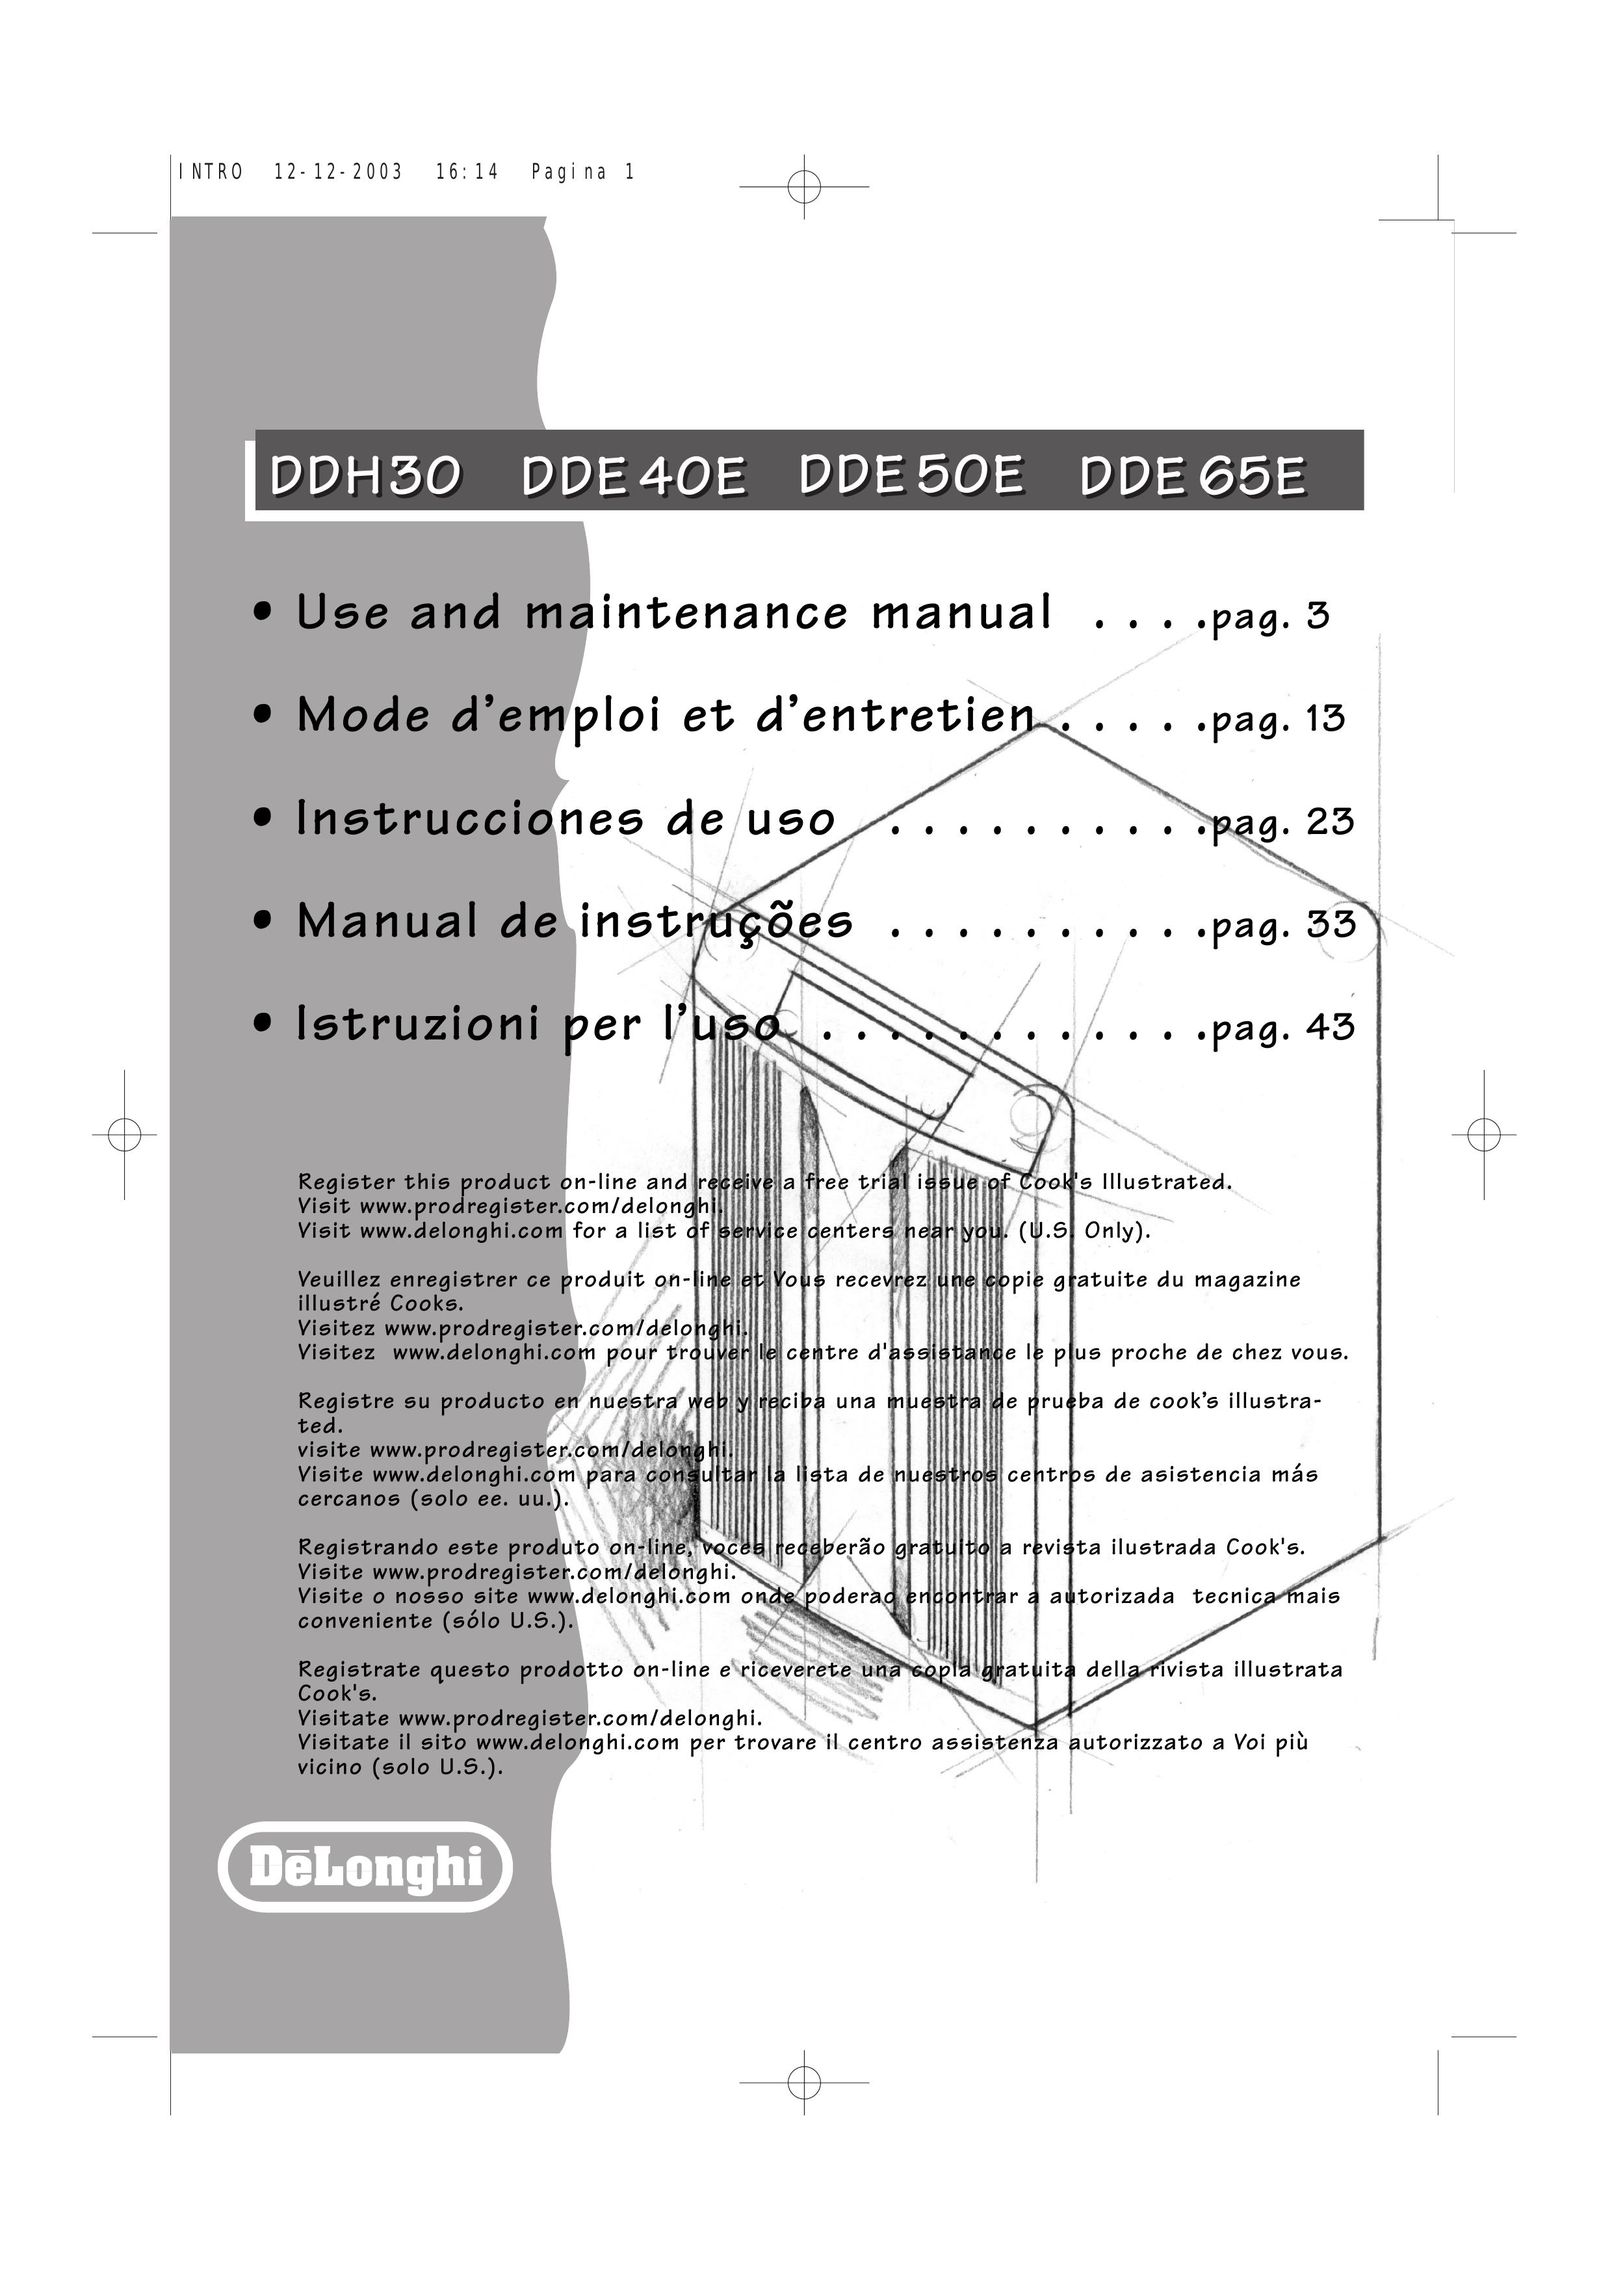 DeLonghi DDE 40EDDH30 Air Cleaner User Manual